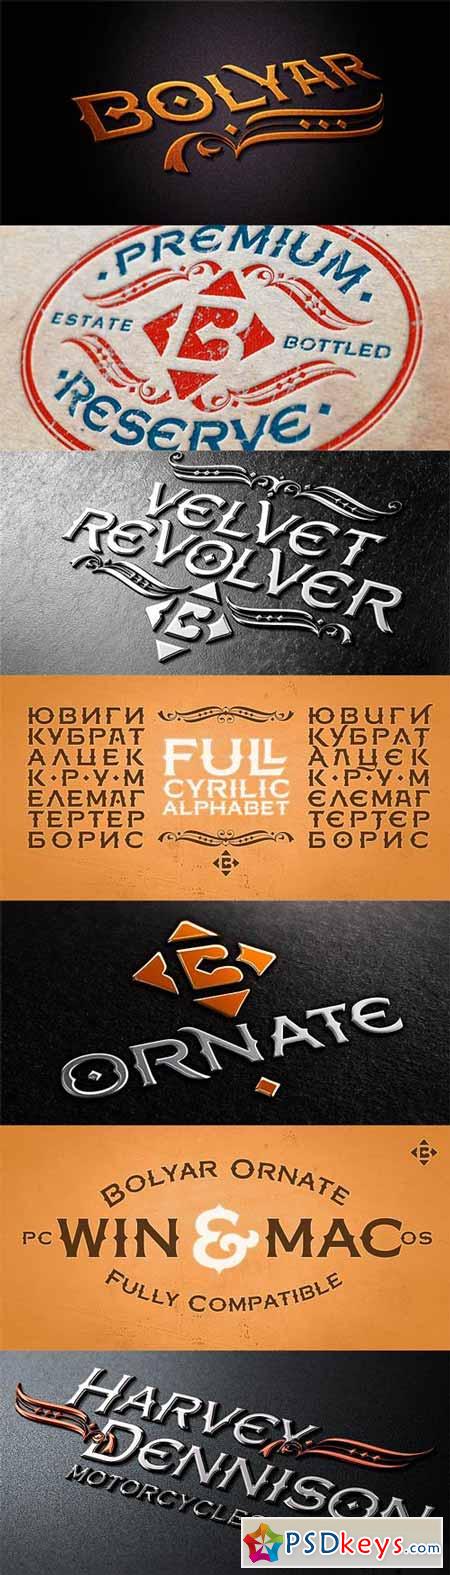 FM Bolyar Ornate Font for $29